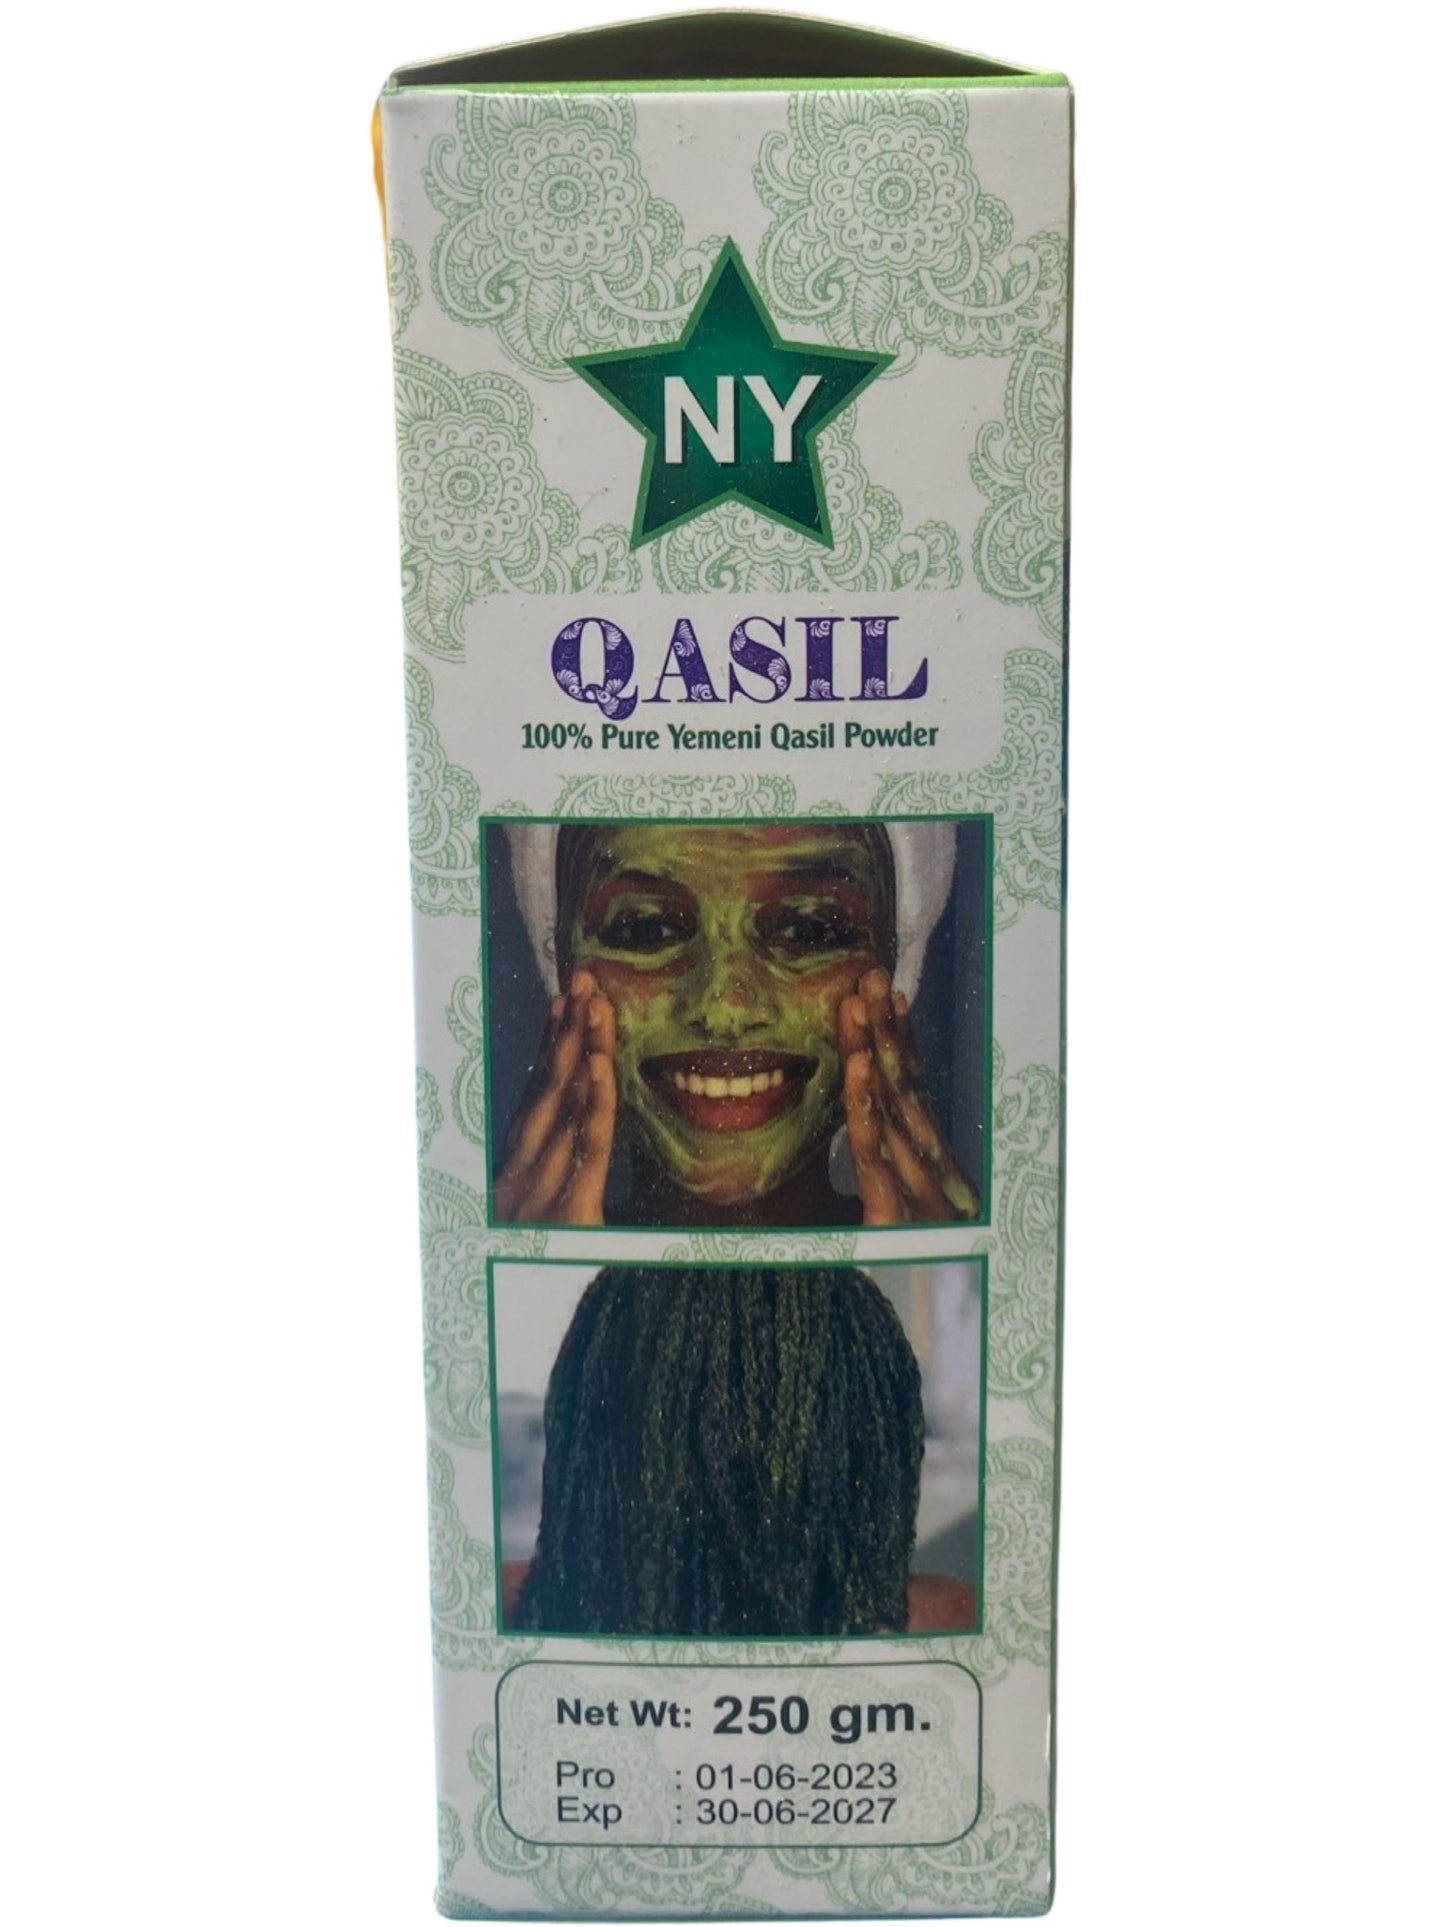 NY
100% Pure Yemeni Qasil Powder